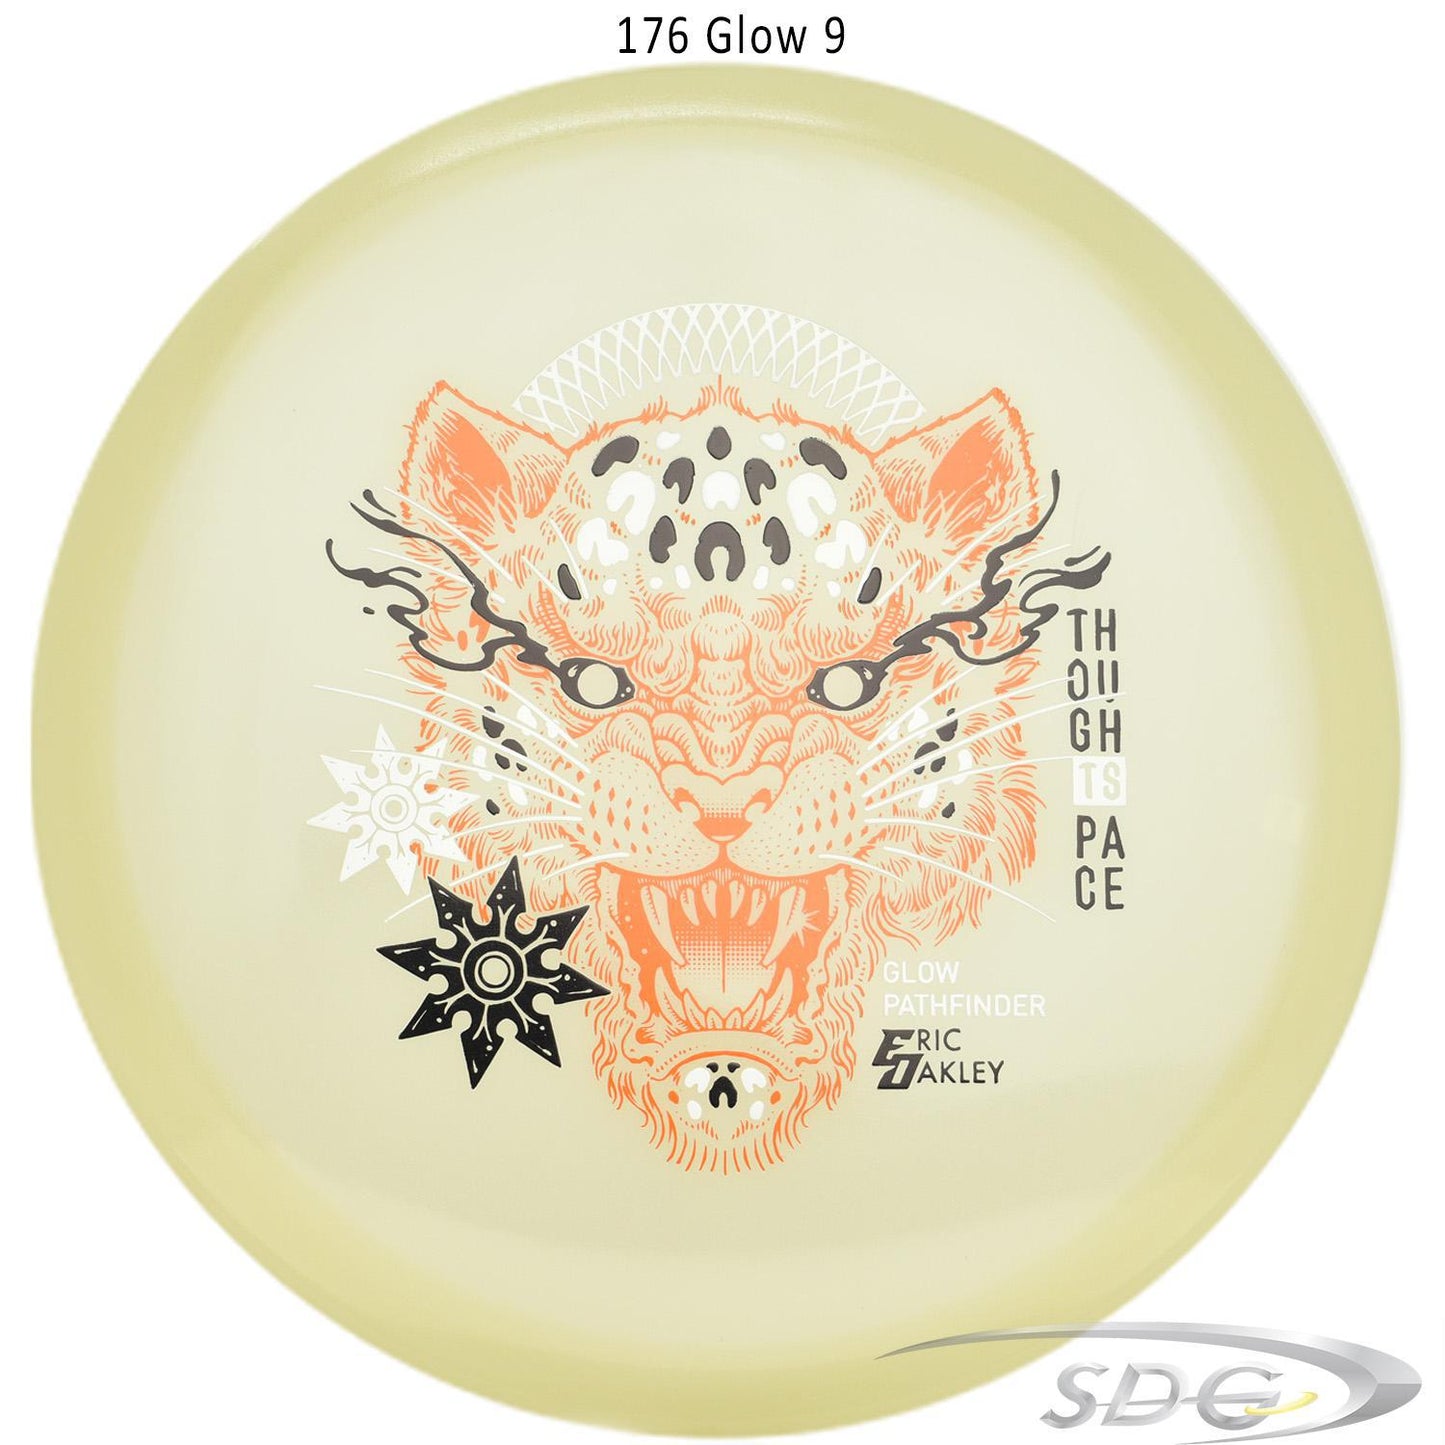 tsa-glow-pathfinder-eric-oakley-snow-leopard-disc-golf-mid-range 176 Glow 9 